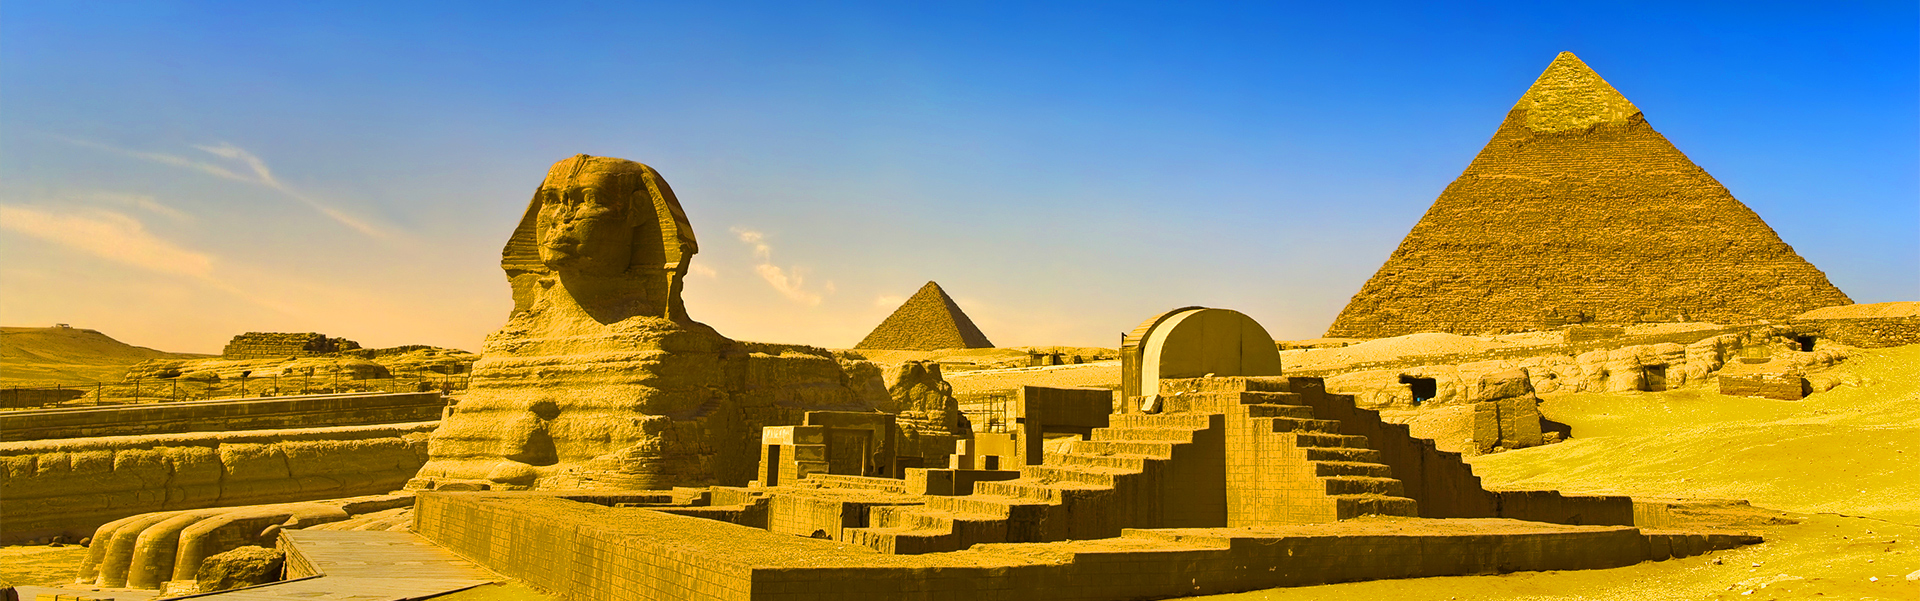 Sphinx Pyramids Egypt LDS Tours